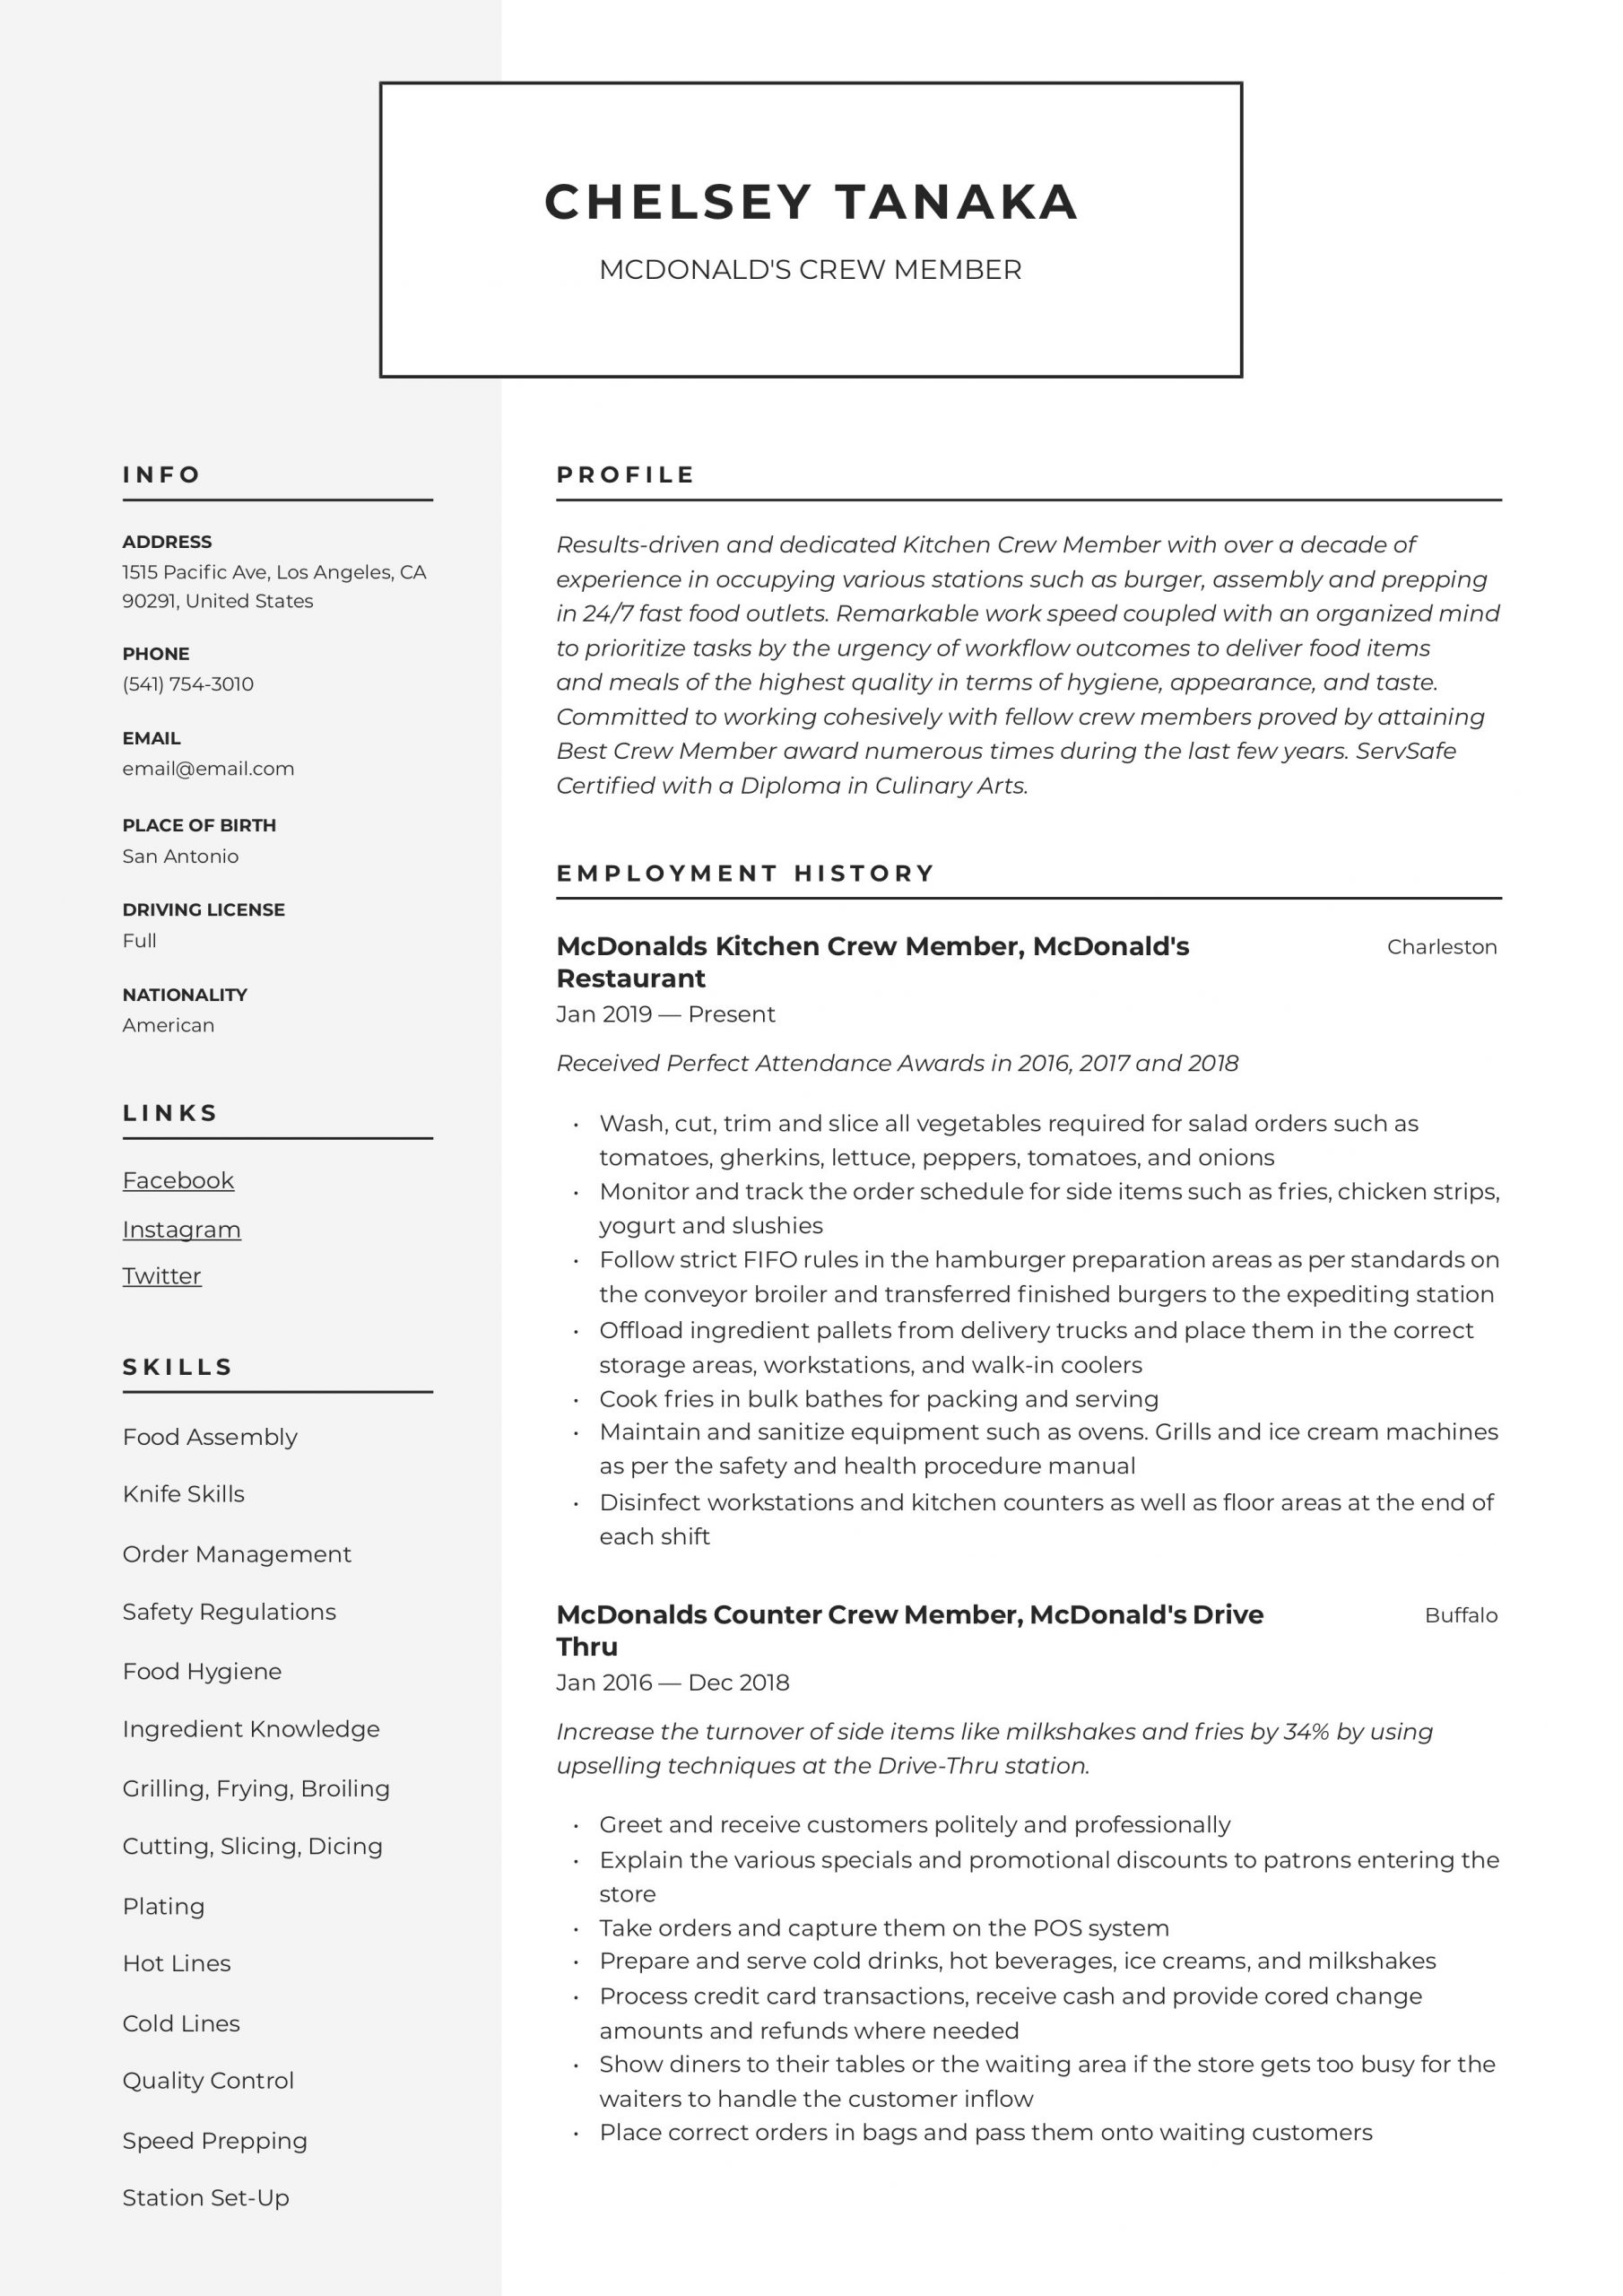 Sample Resume for Kfc Team Member Mcdo Experience